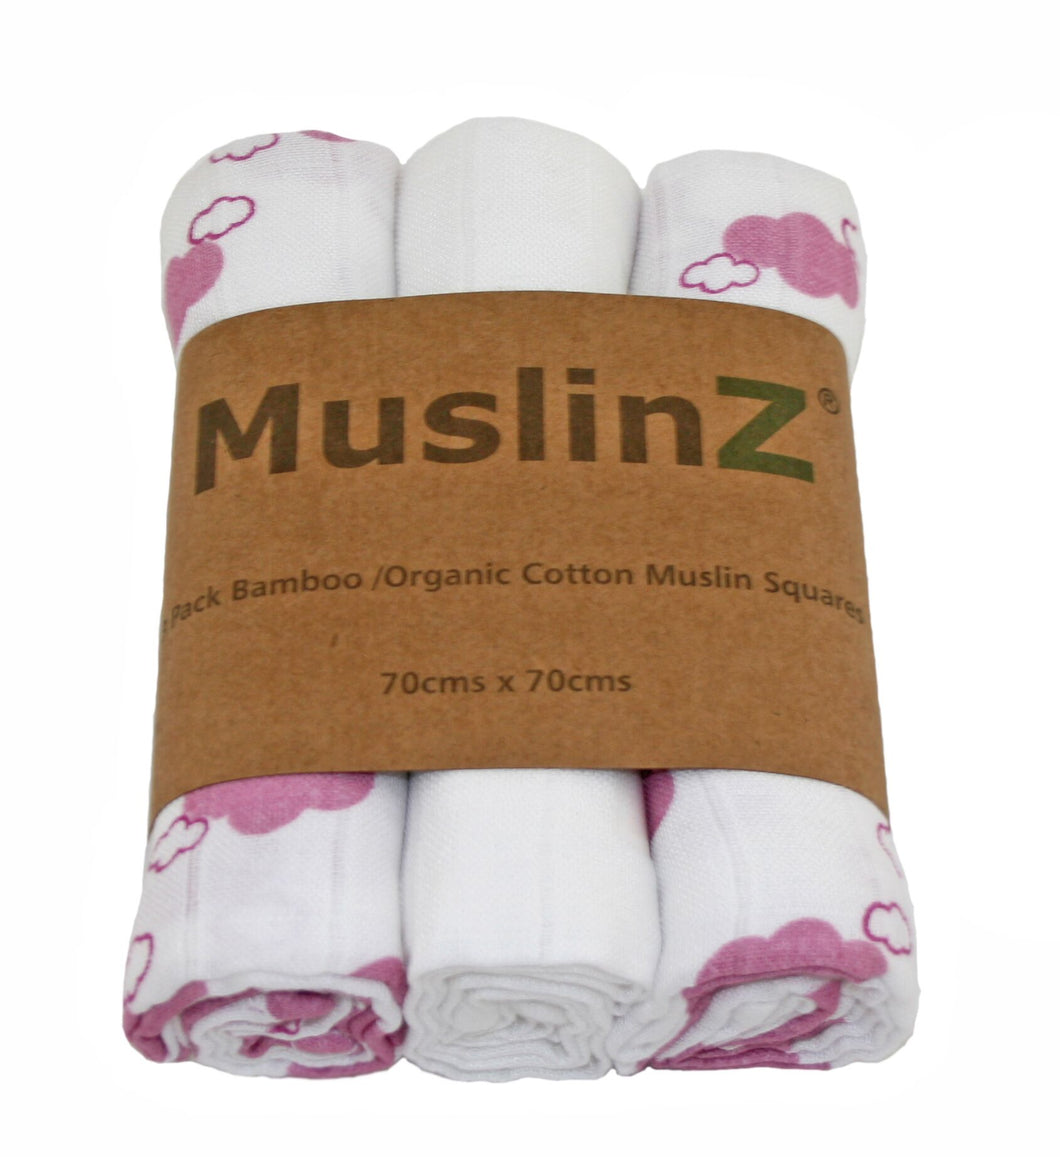 MuslinZ 3 Pack Bamboo/Organic Cotton Mulin Squares 70x70cm - Cloud Print - Pink Cloud - The Monkey Box